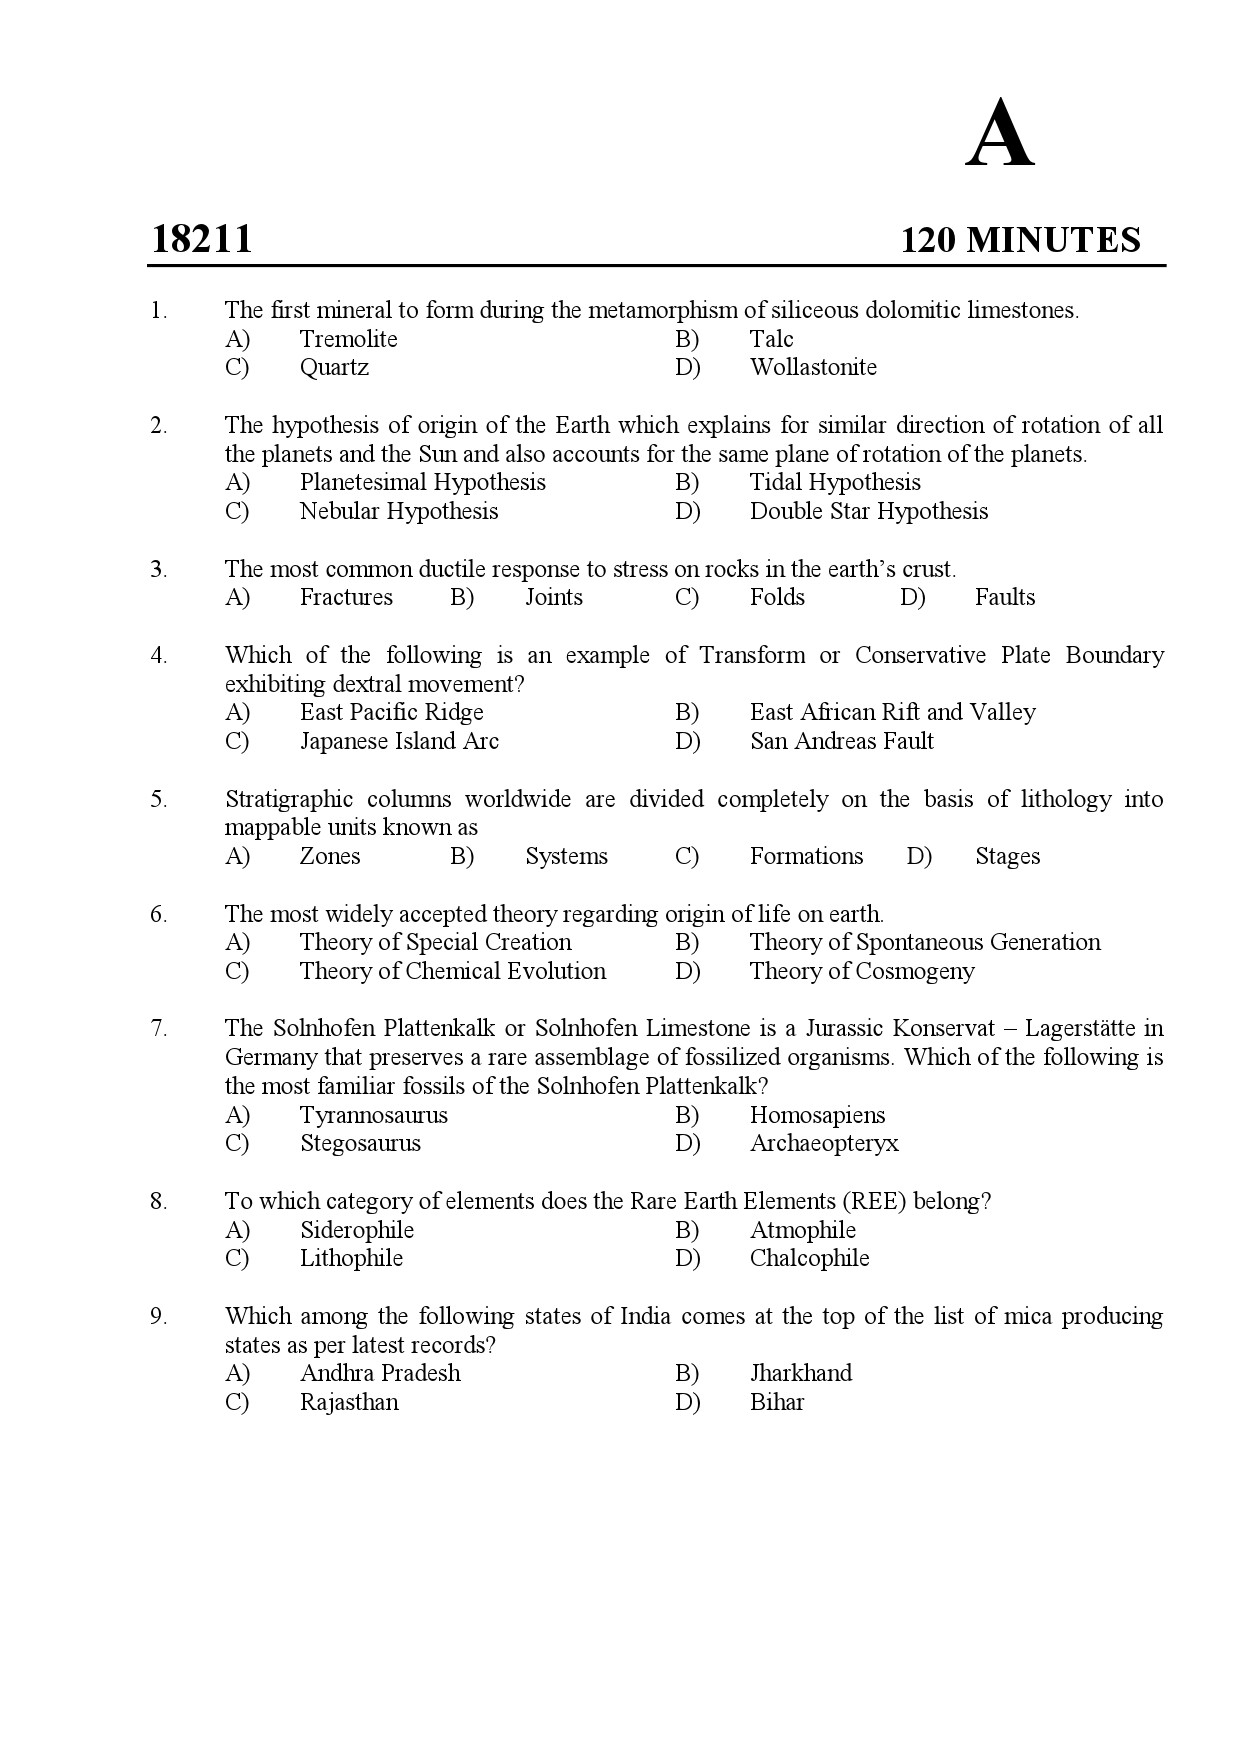 Kerala SET Geology Exam Question Paper February 2018 1